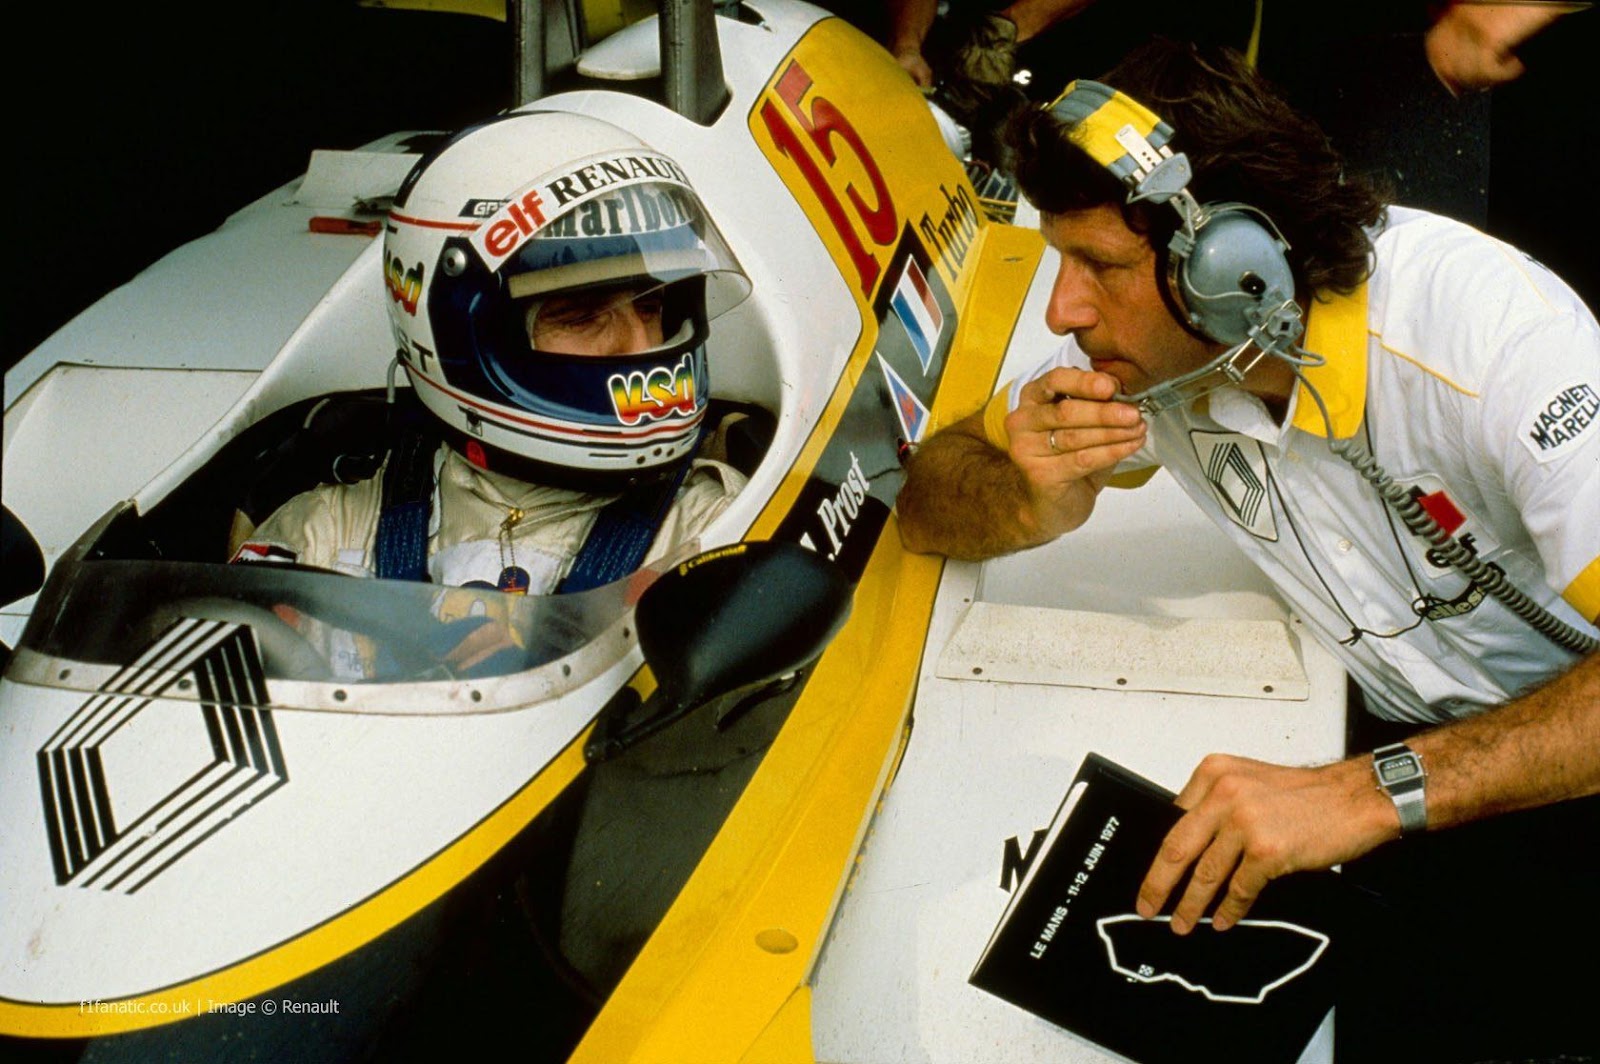 Alain Prost, Renault.